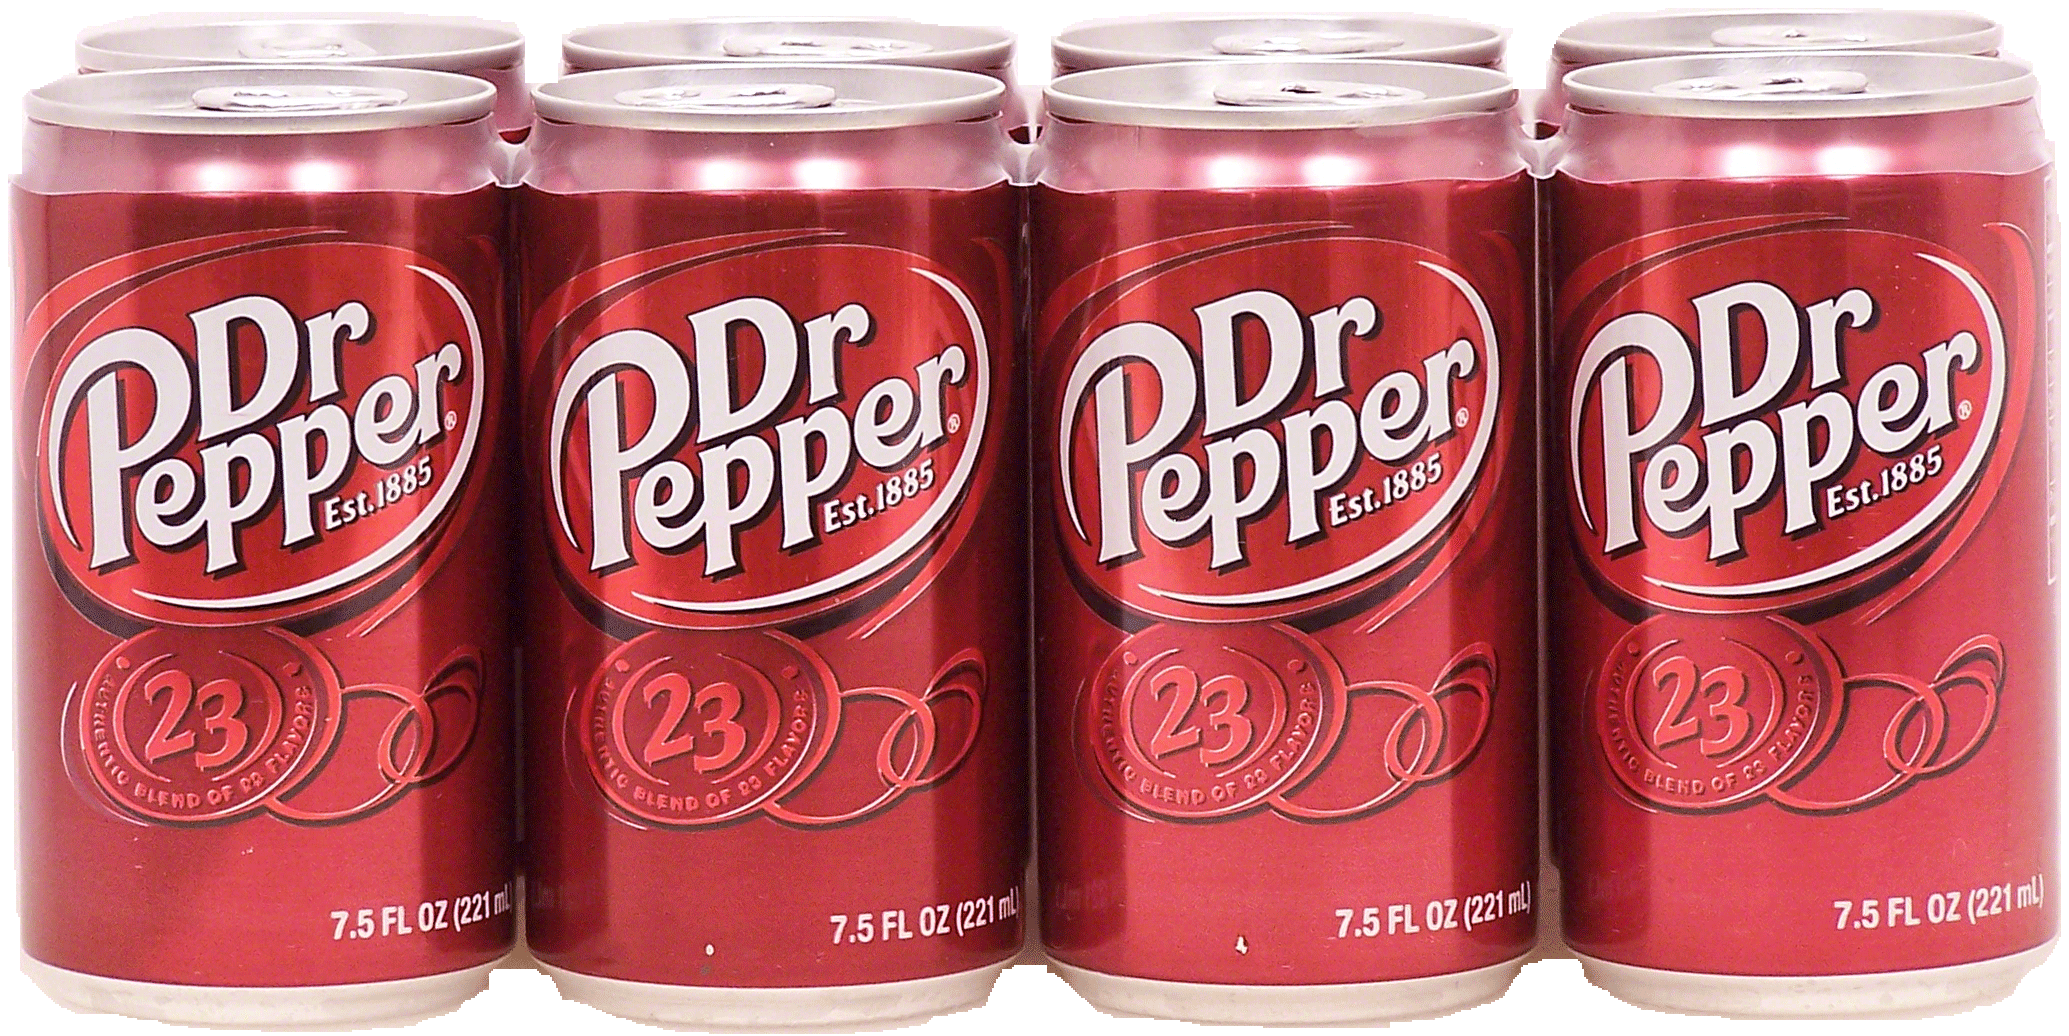 Pepper состав. Доктор Пеппер. Доктор Пеппер дипинс. Доктор Пеппер 2 литра. Доктор Пеппер вкусы.